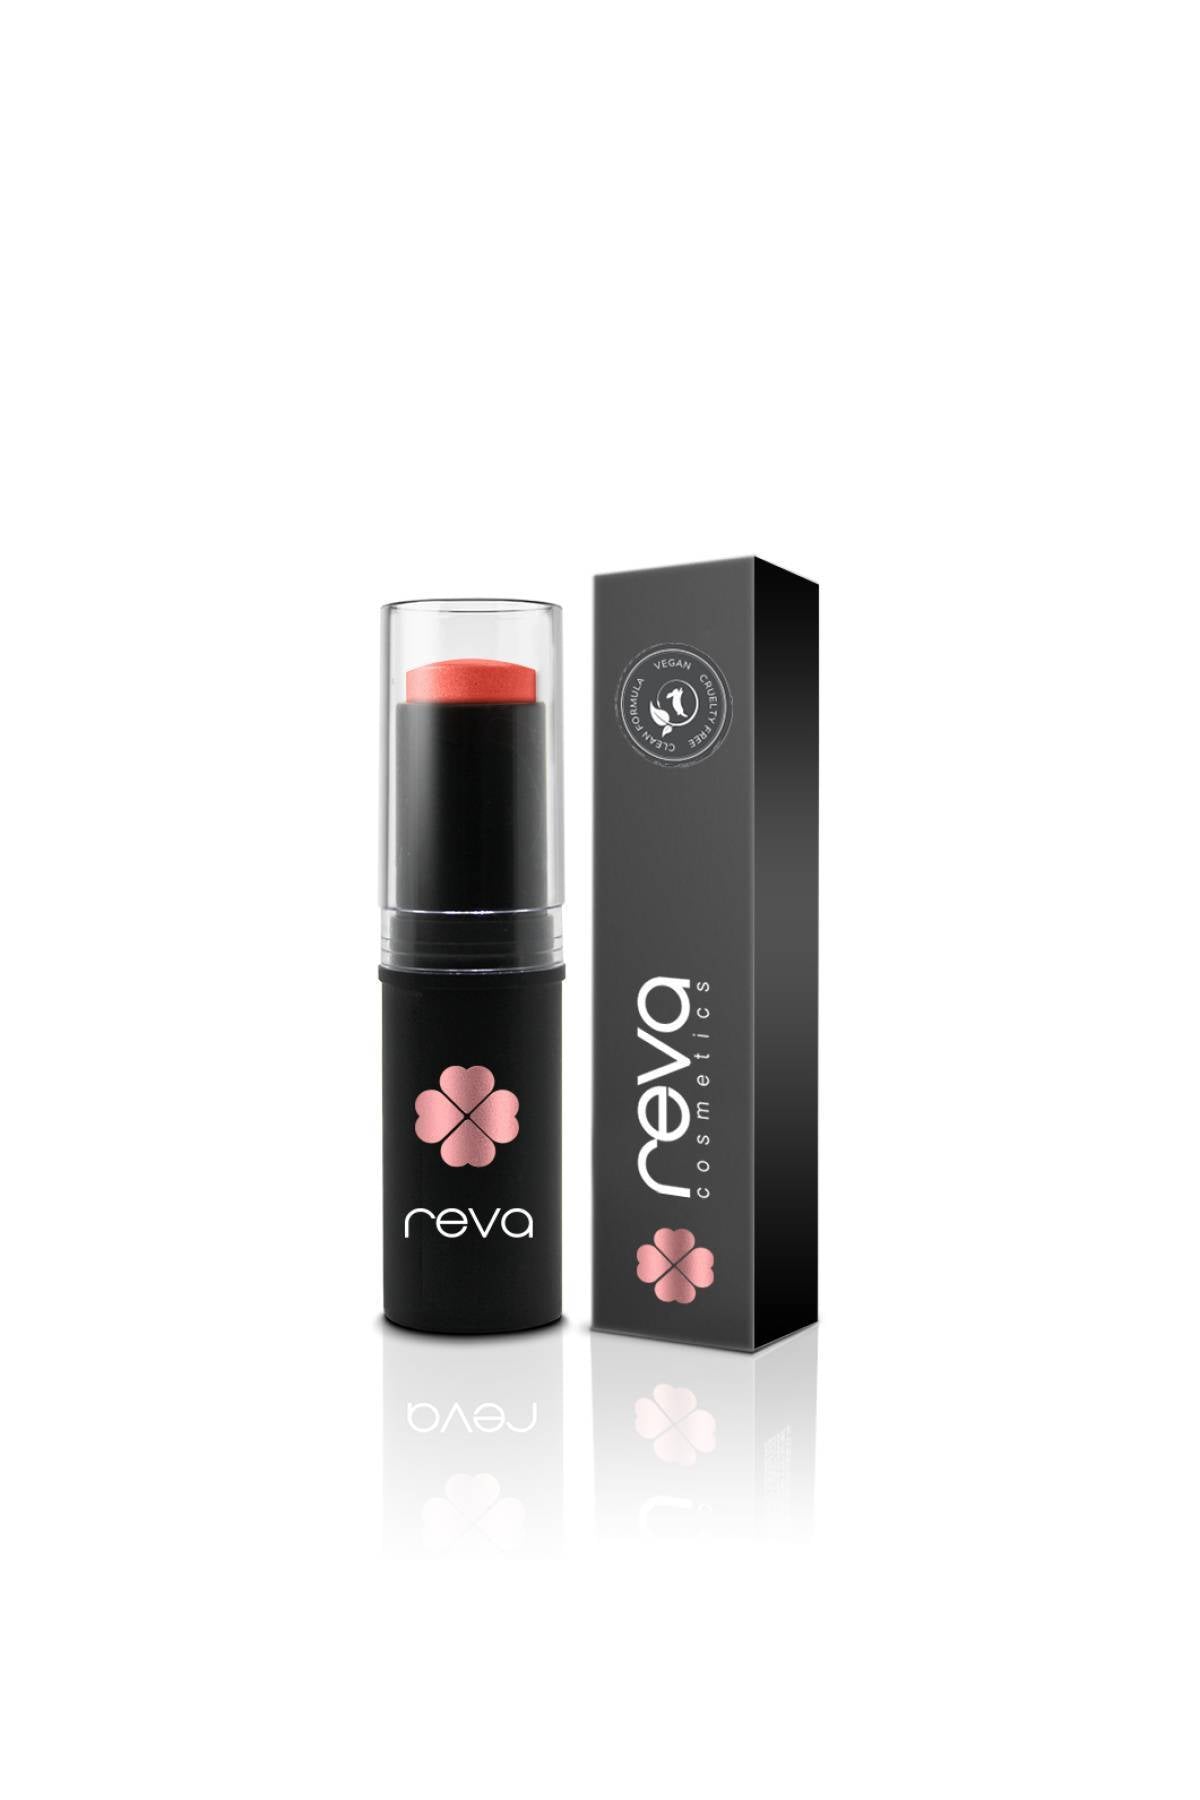 Reva Blush, Eyeshadow, Lip Color 3 in 1 Stick - Lip Cheek Eye Tint - No:114 - Vegan &amp; Clean Ingredients